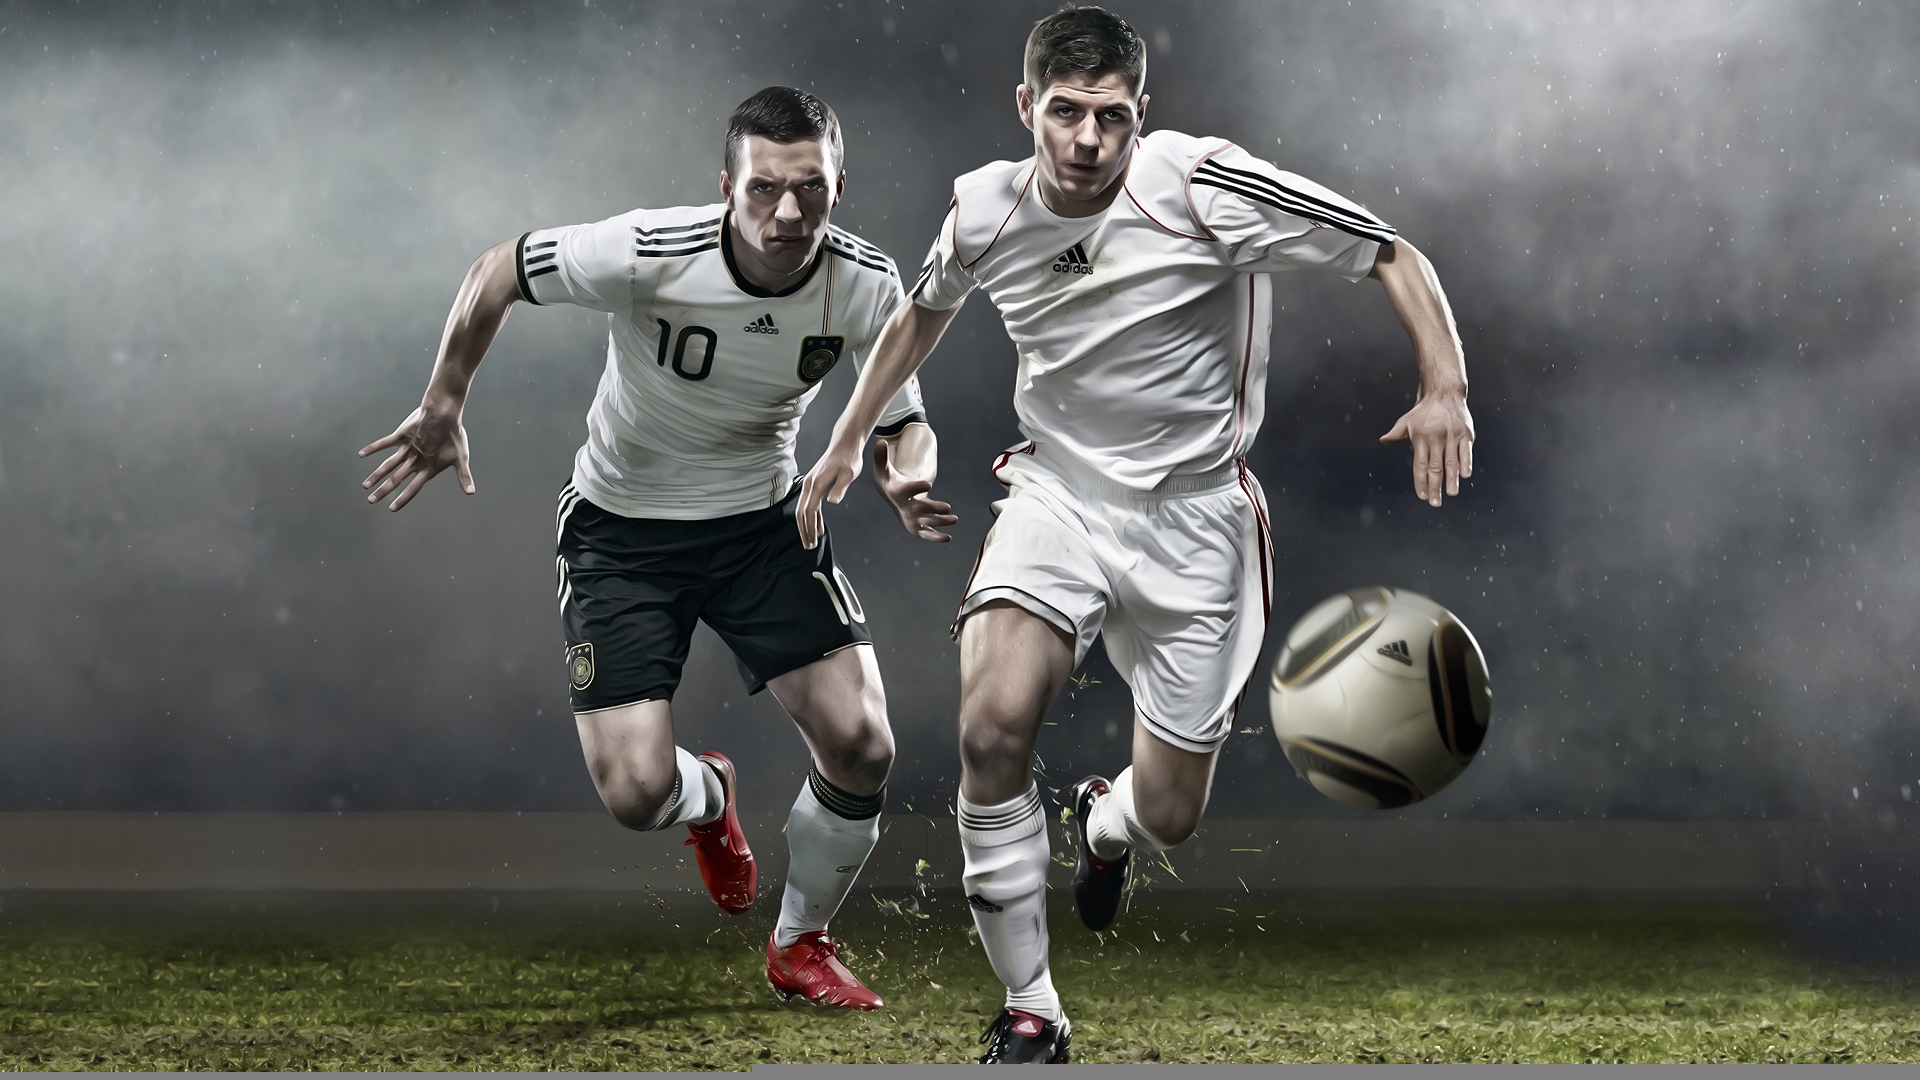 HD Soccer Football Player Wallpaper 1080p Full Size ...